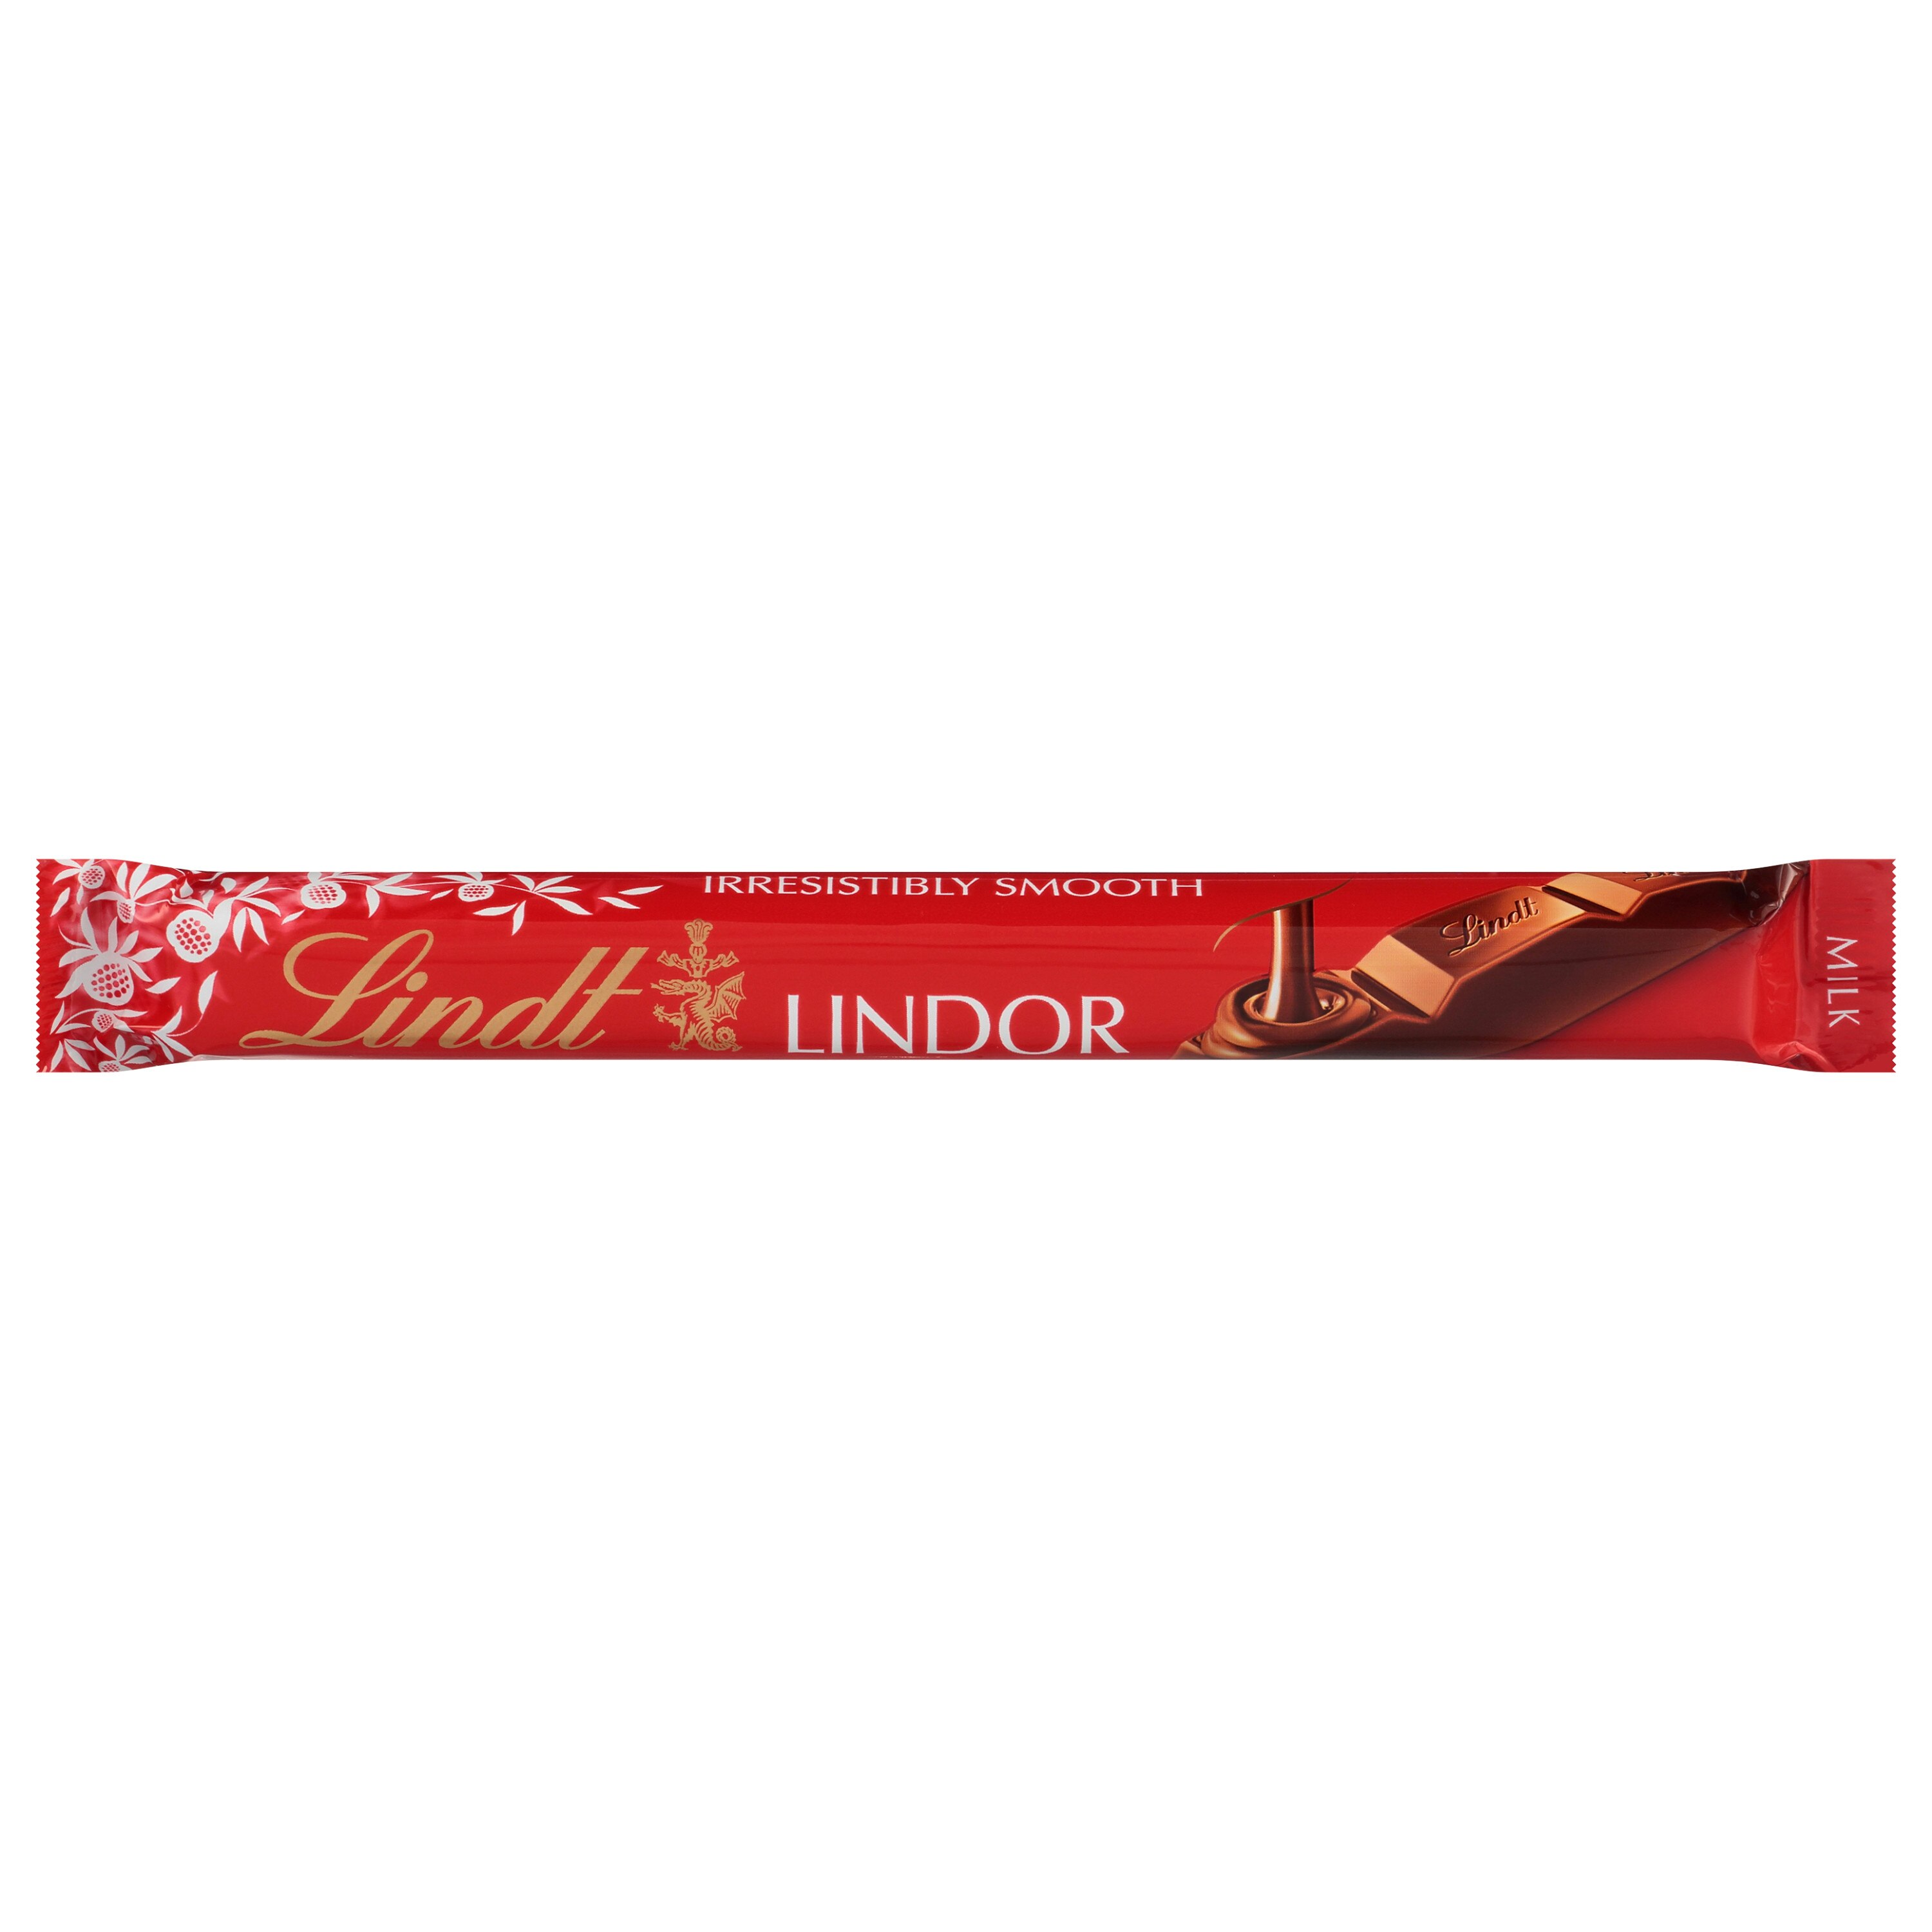 Lindt Lindor Milk Chocolate Truffle Bar, Chocolate Candy Bar With Smooth Center, 1.3 Oz , CVS